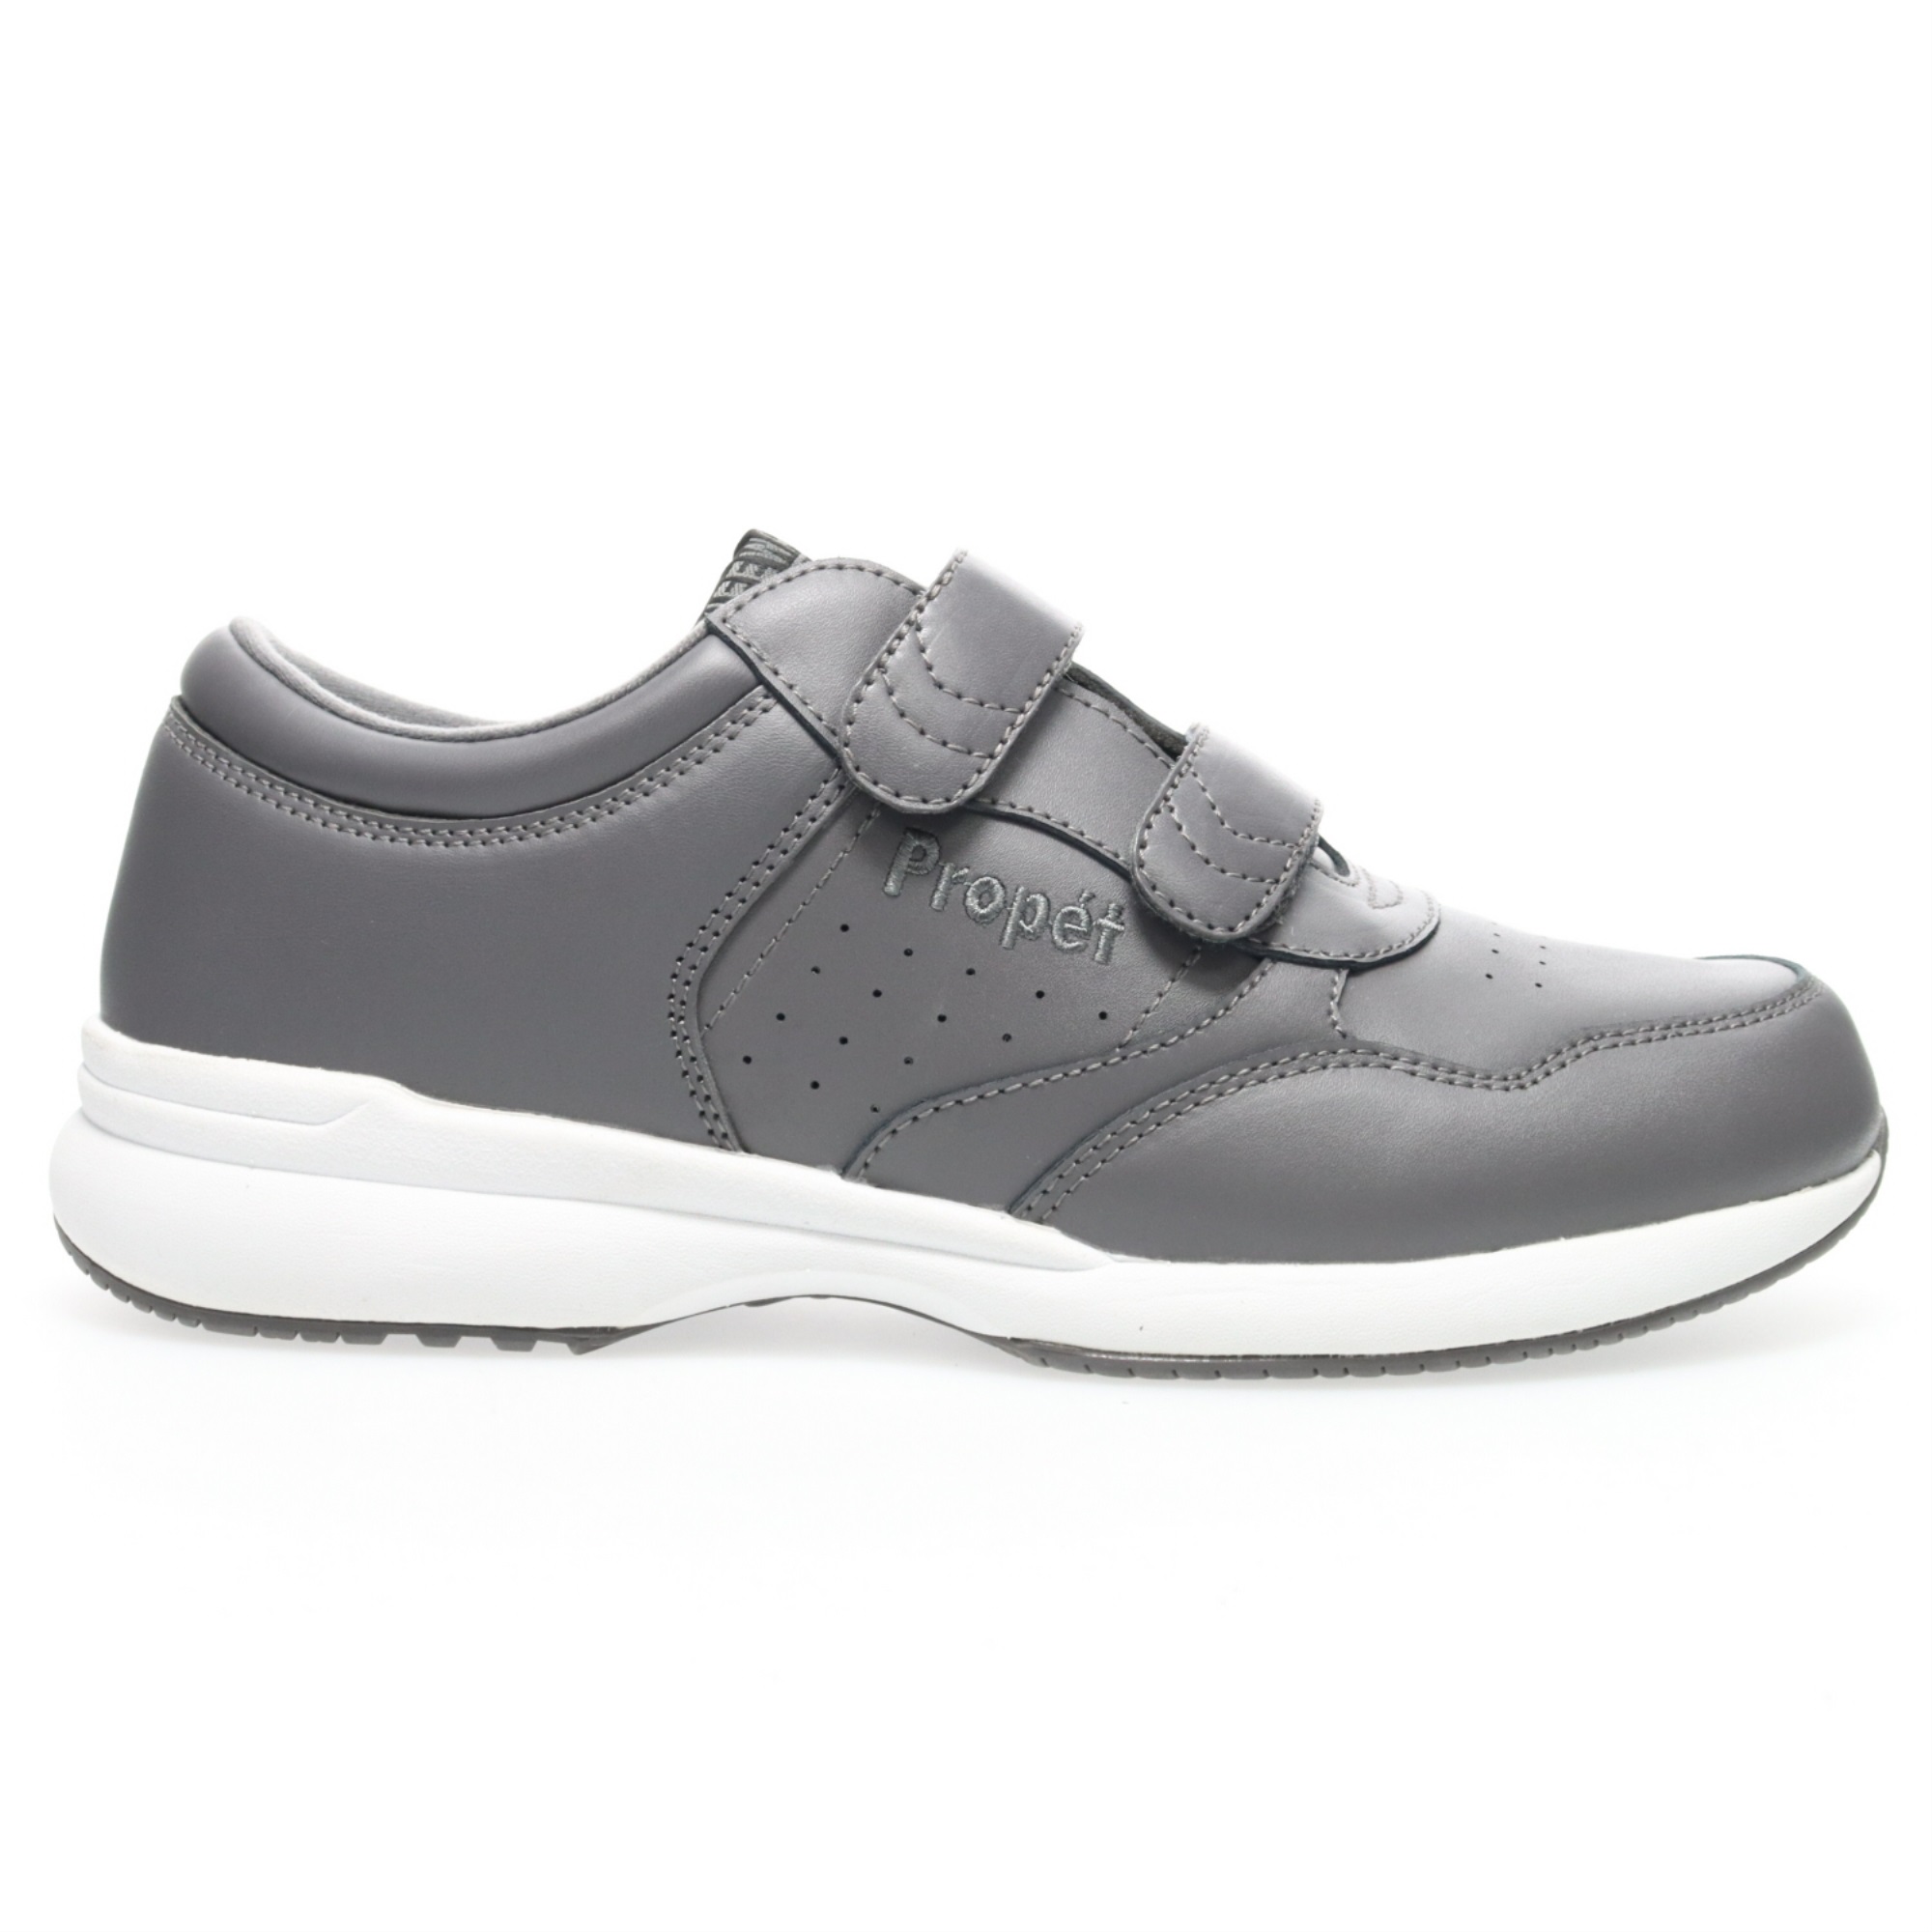 Propet Life Walker Strap Men's Sneakers - Dark Grey, Size 12 - image 3 of 5